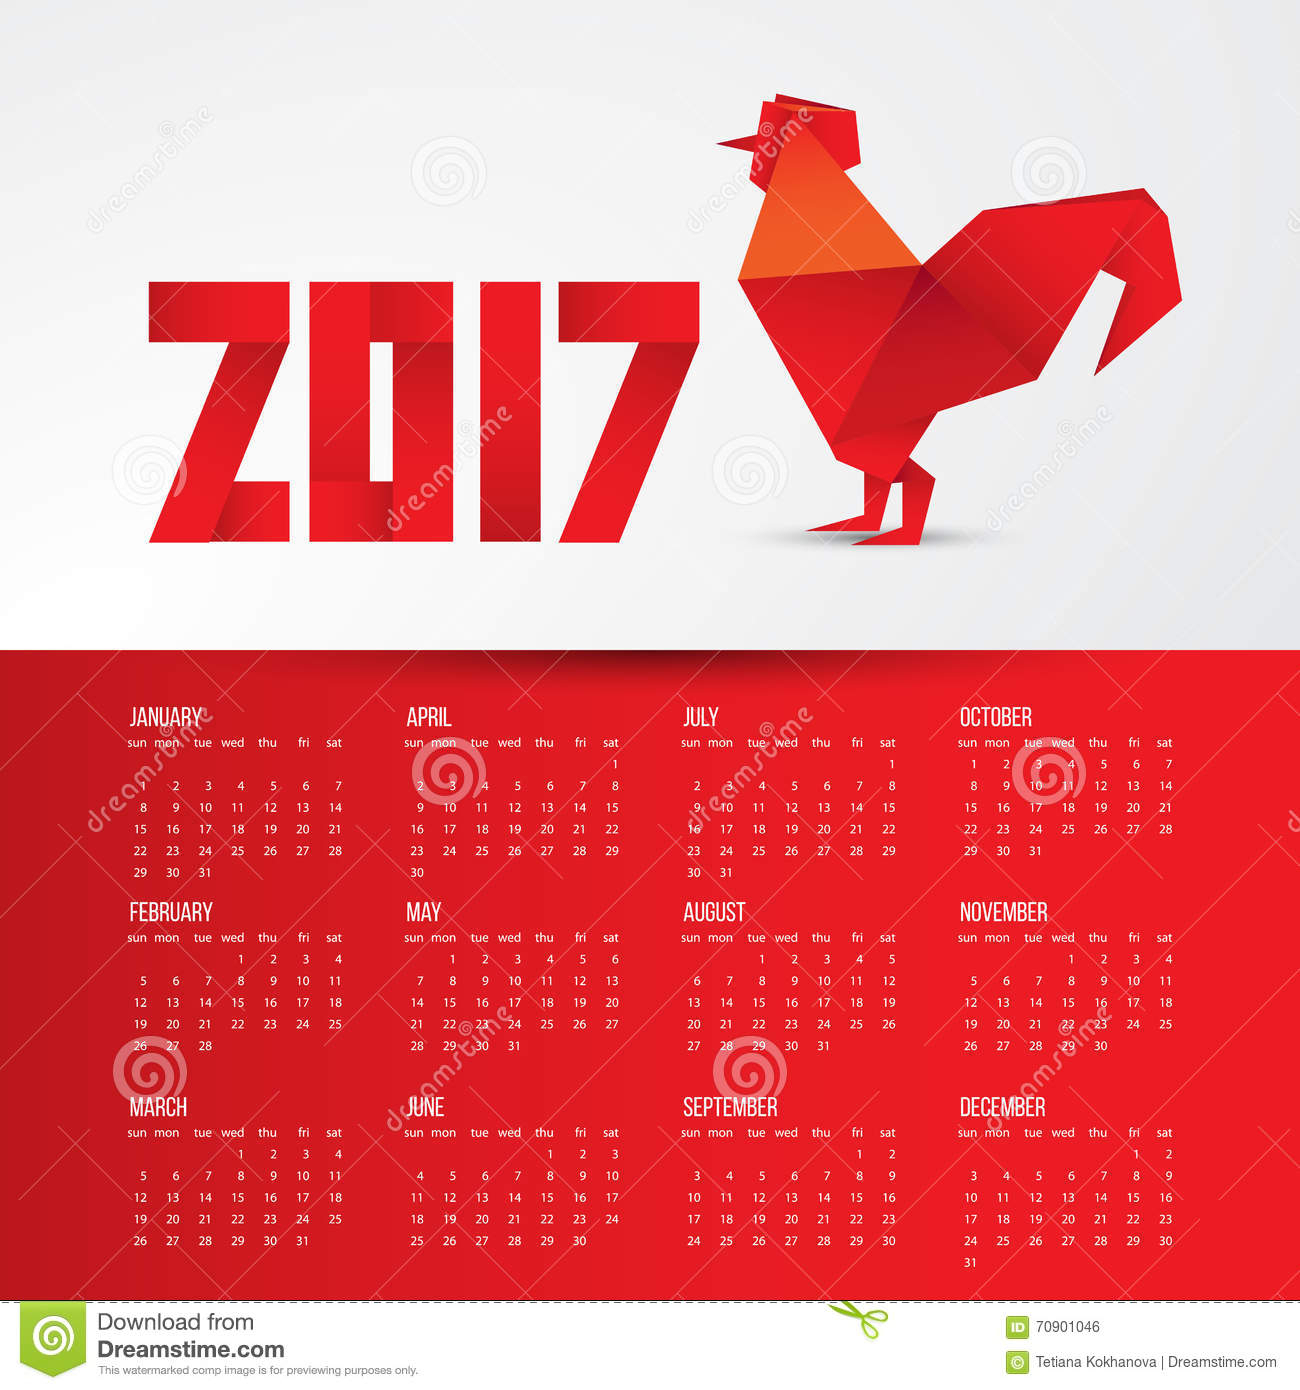 Six Year Calendar  2017, 2018, 2019, 2020, 2021 And 2022 for Lunar Calendar For Cockfighting